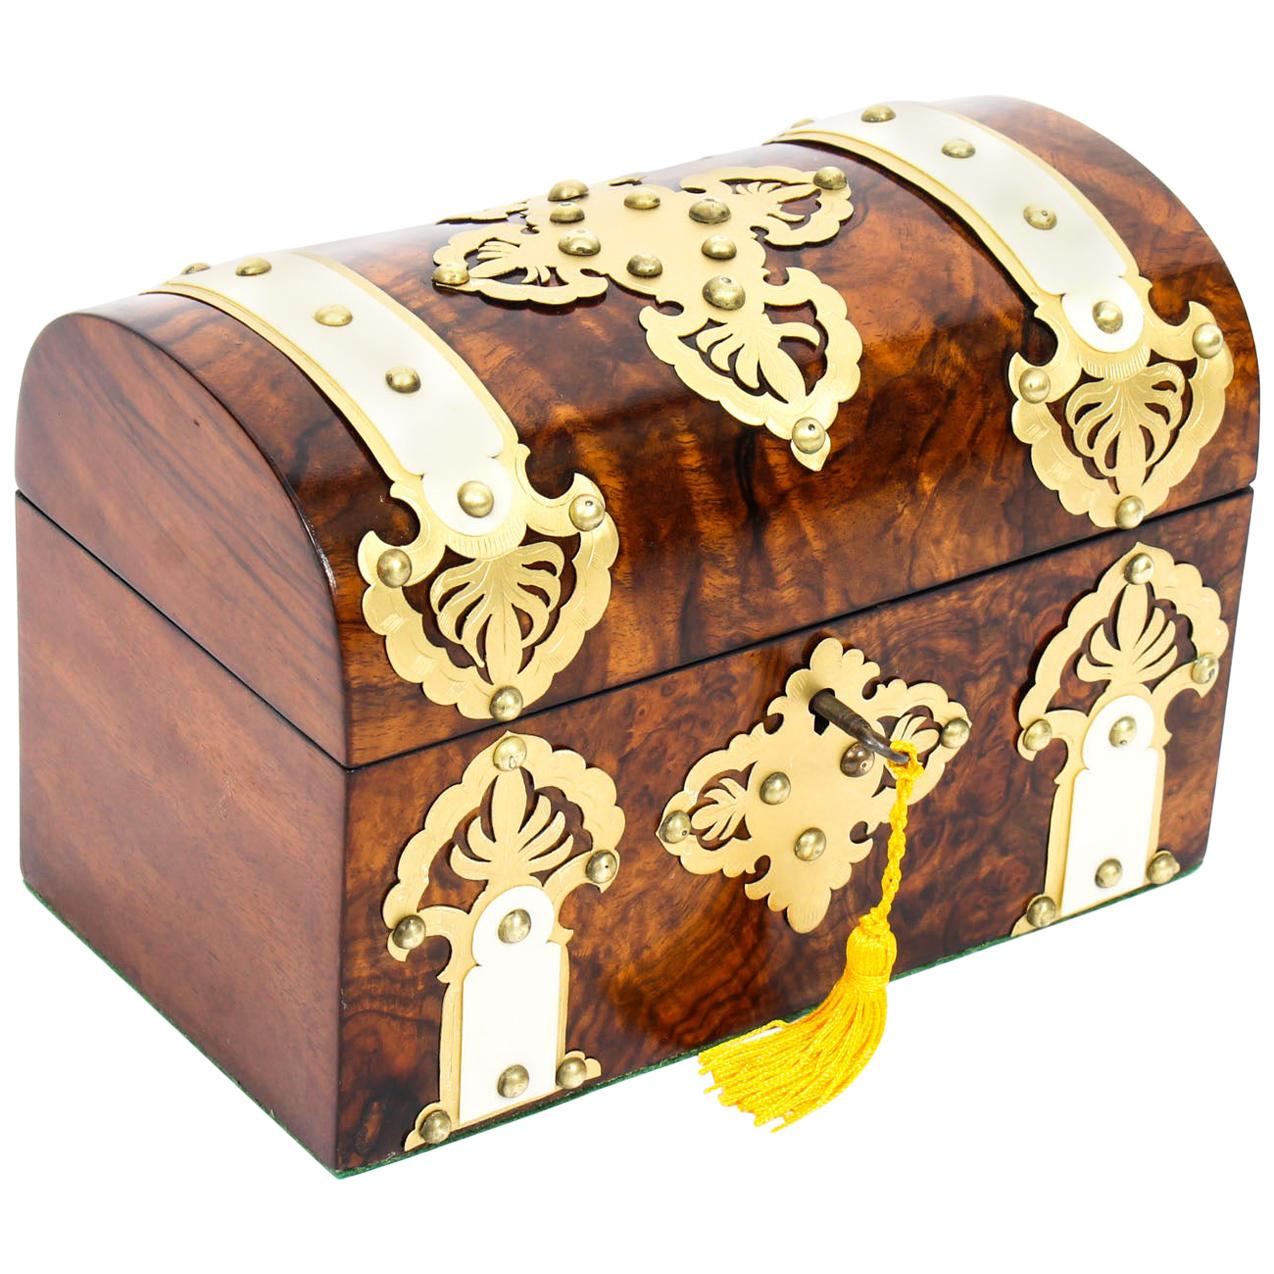 Antique Burr Walnut, Ivorine and Brass Box Casket with Key, 19th Century